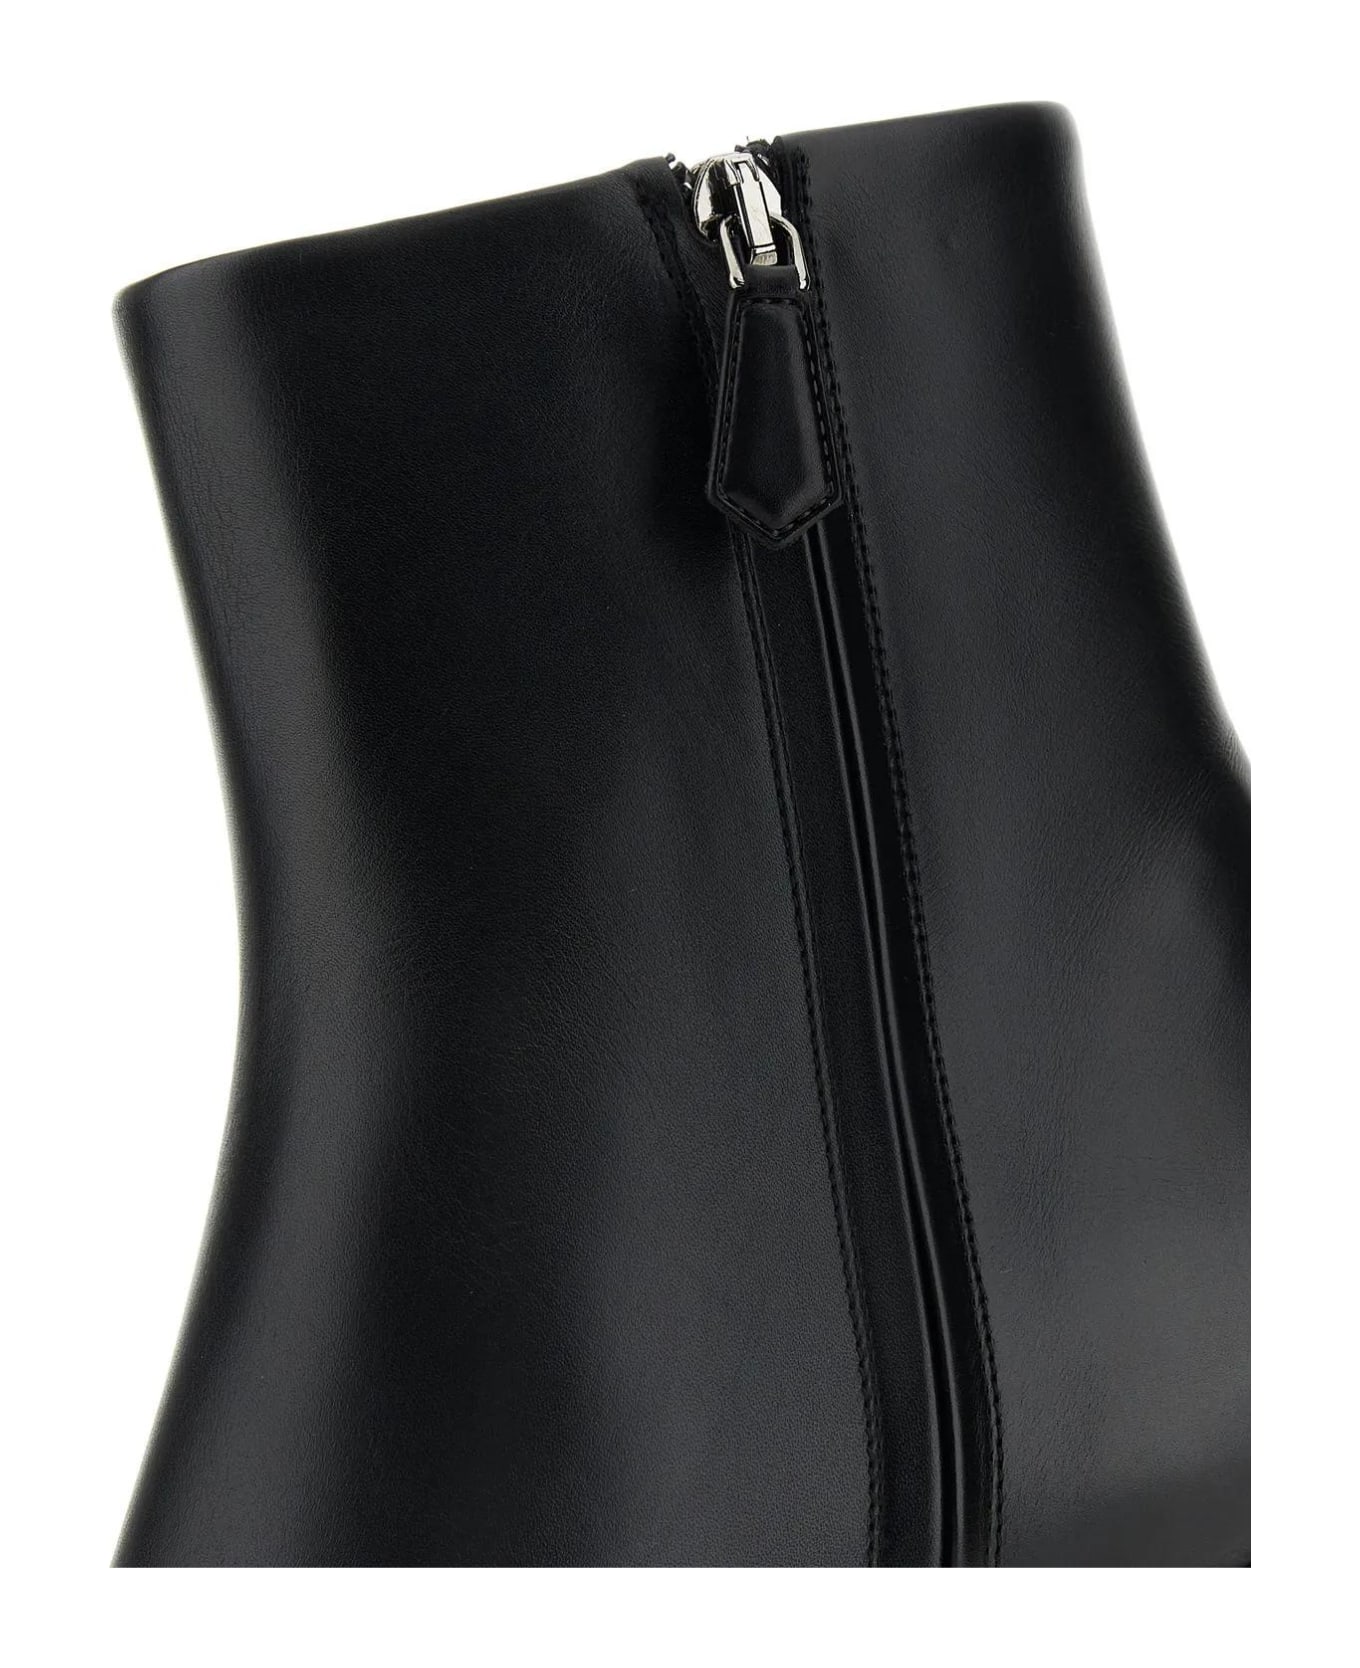 Prada Black Leather Ankle Boots - NERO